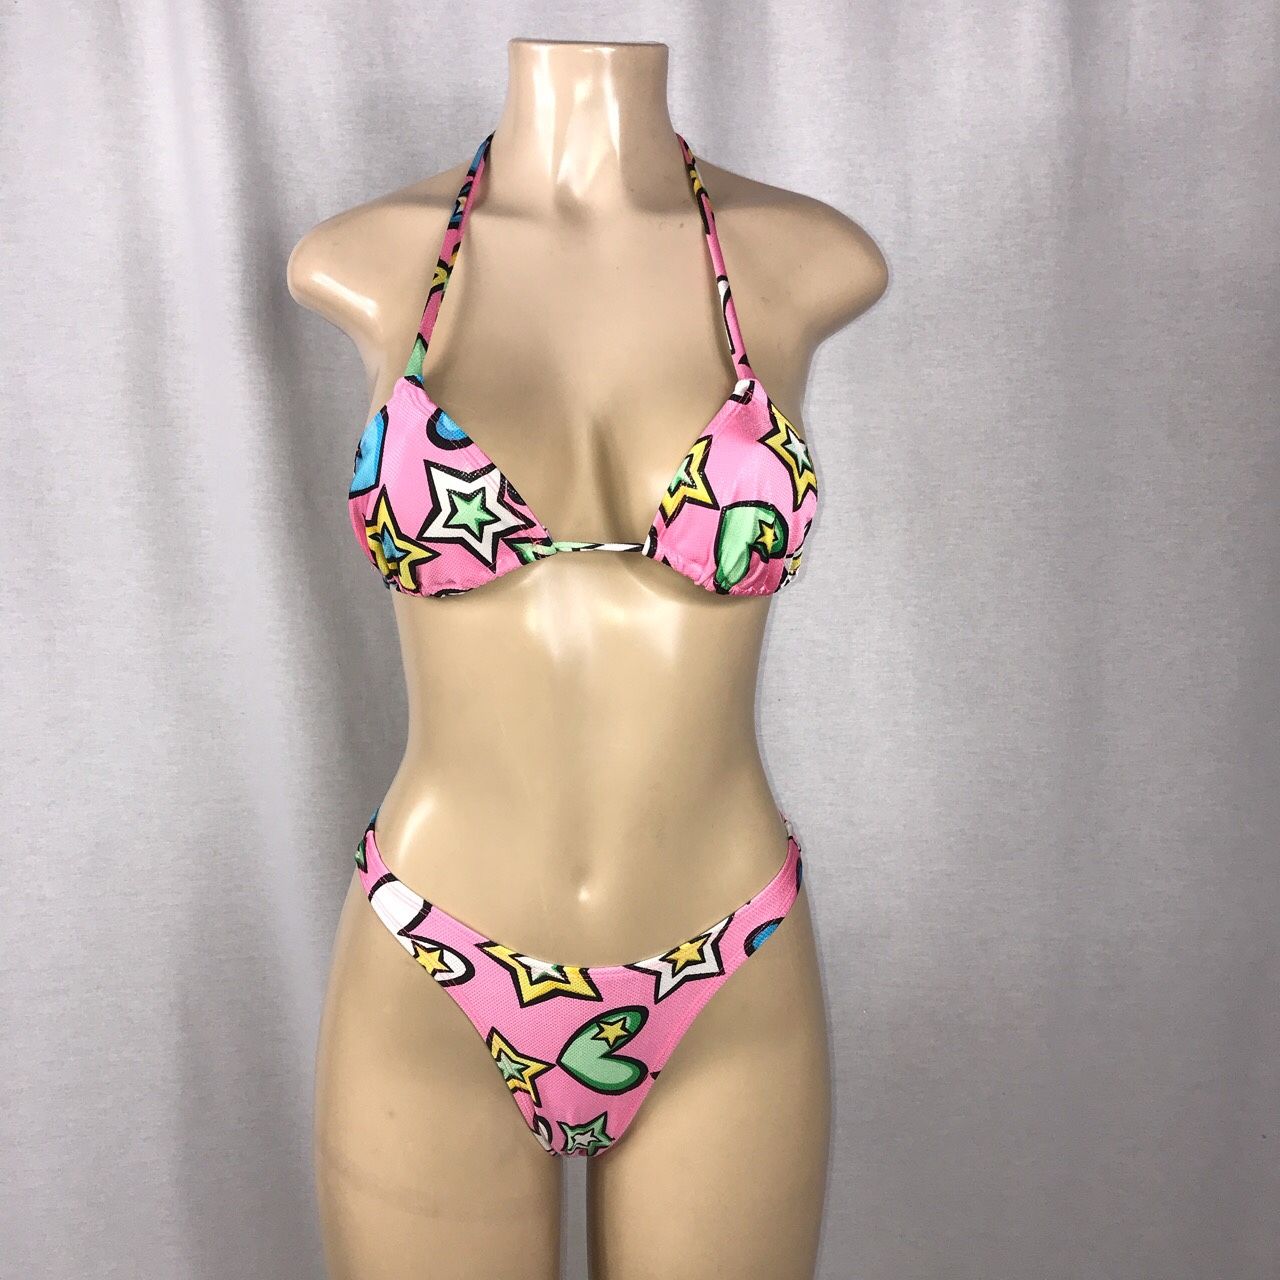 Zuliana Hot and Sexy bright wet look stars and hearts bikini. Pink with hearts 💕 and stars ⭐️ prin